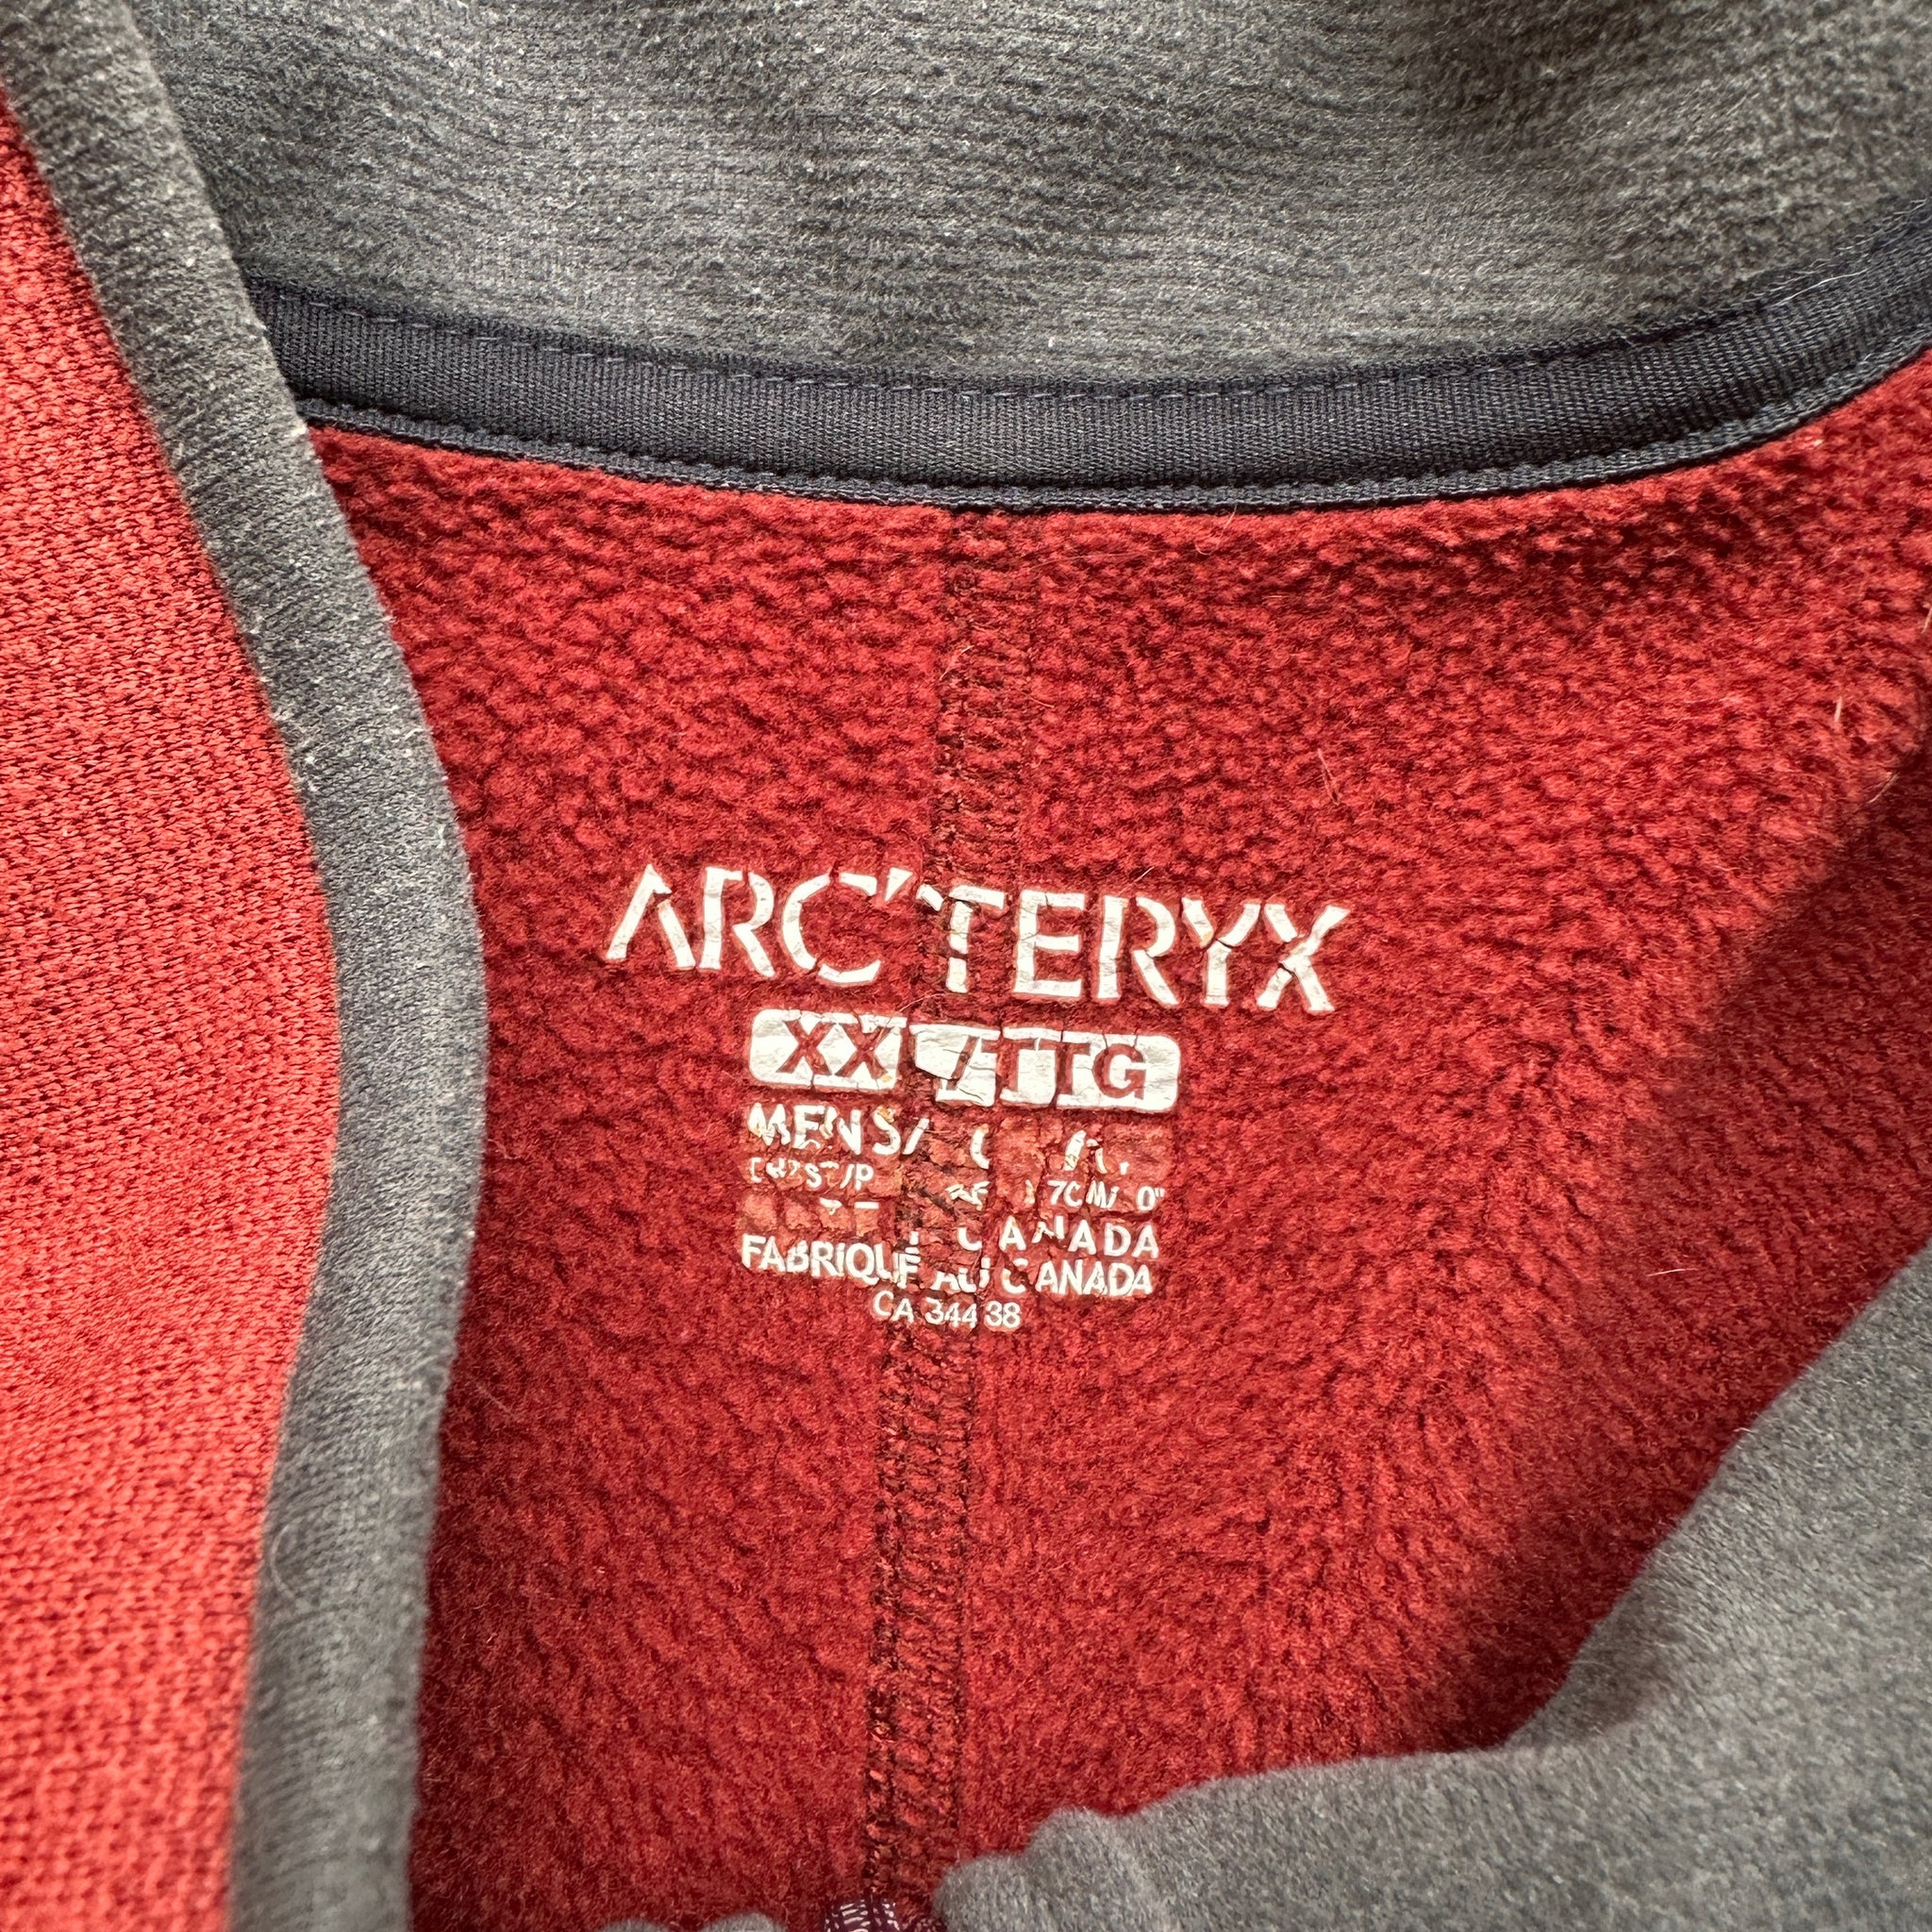 Made in canada🇨🇦 Arc’teryx fleece 

XXL